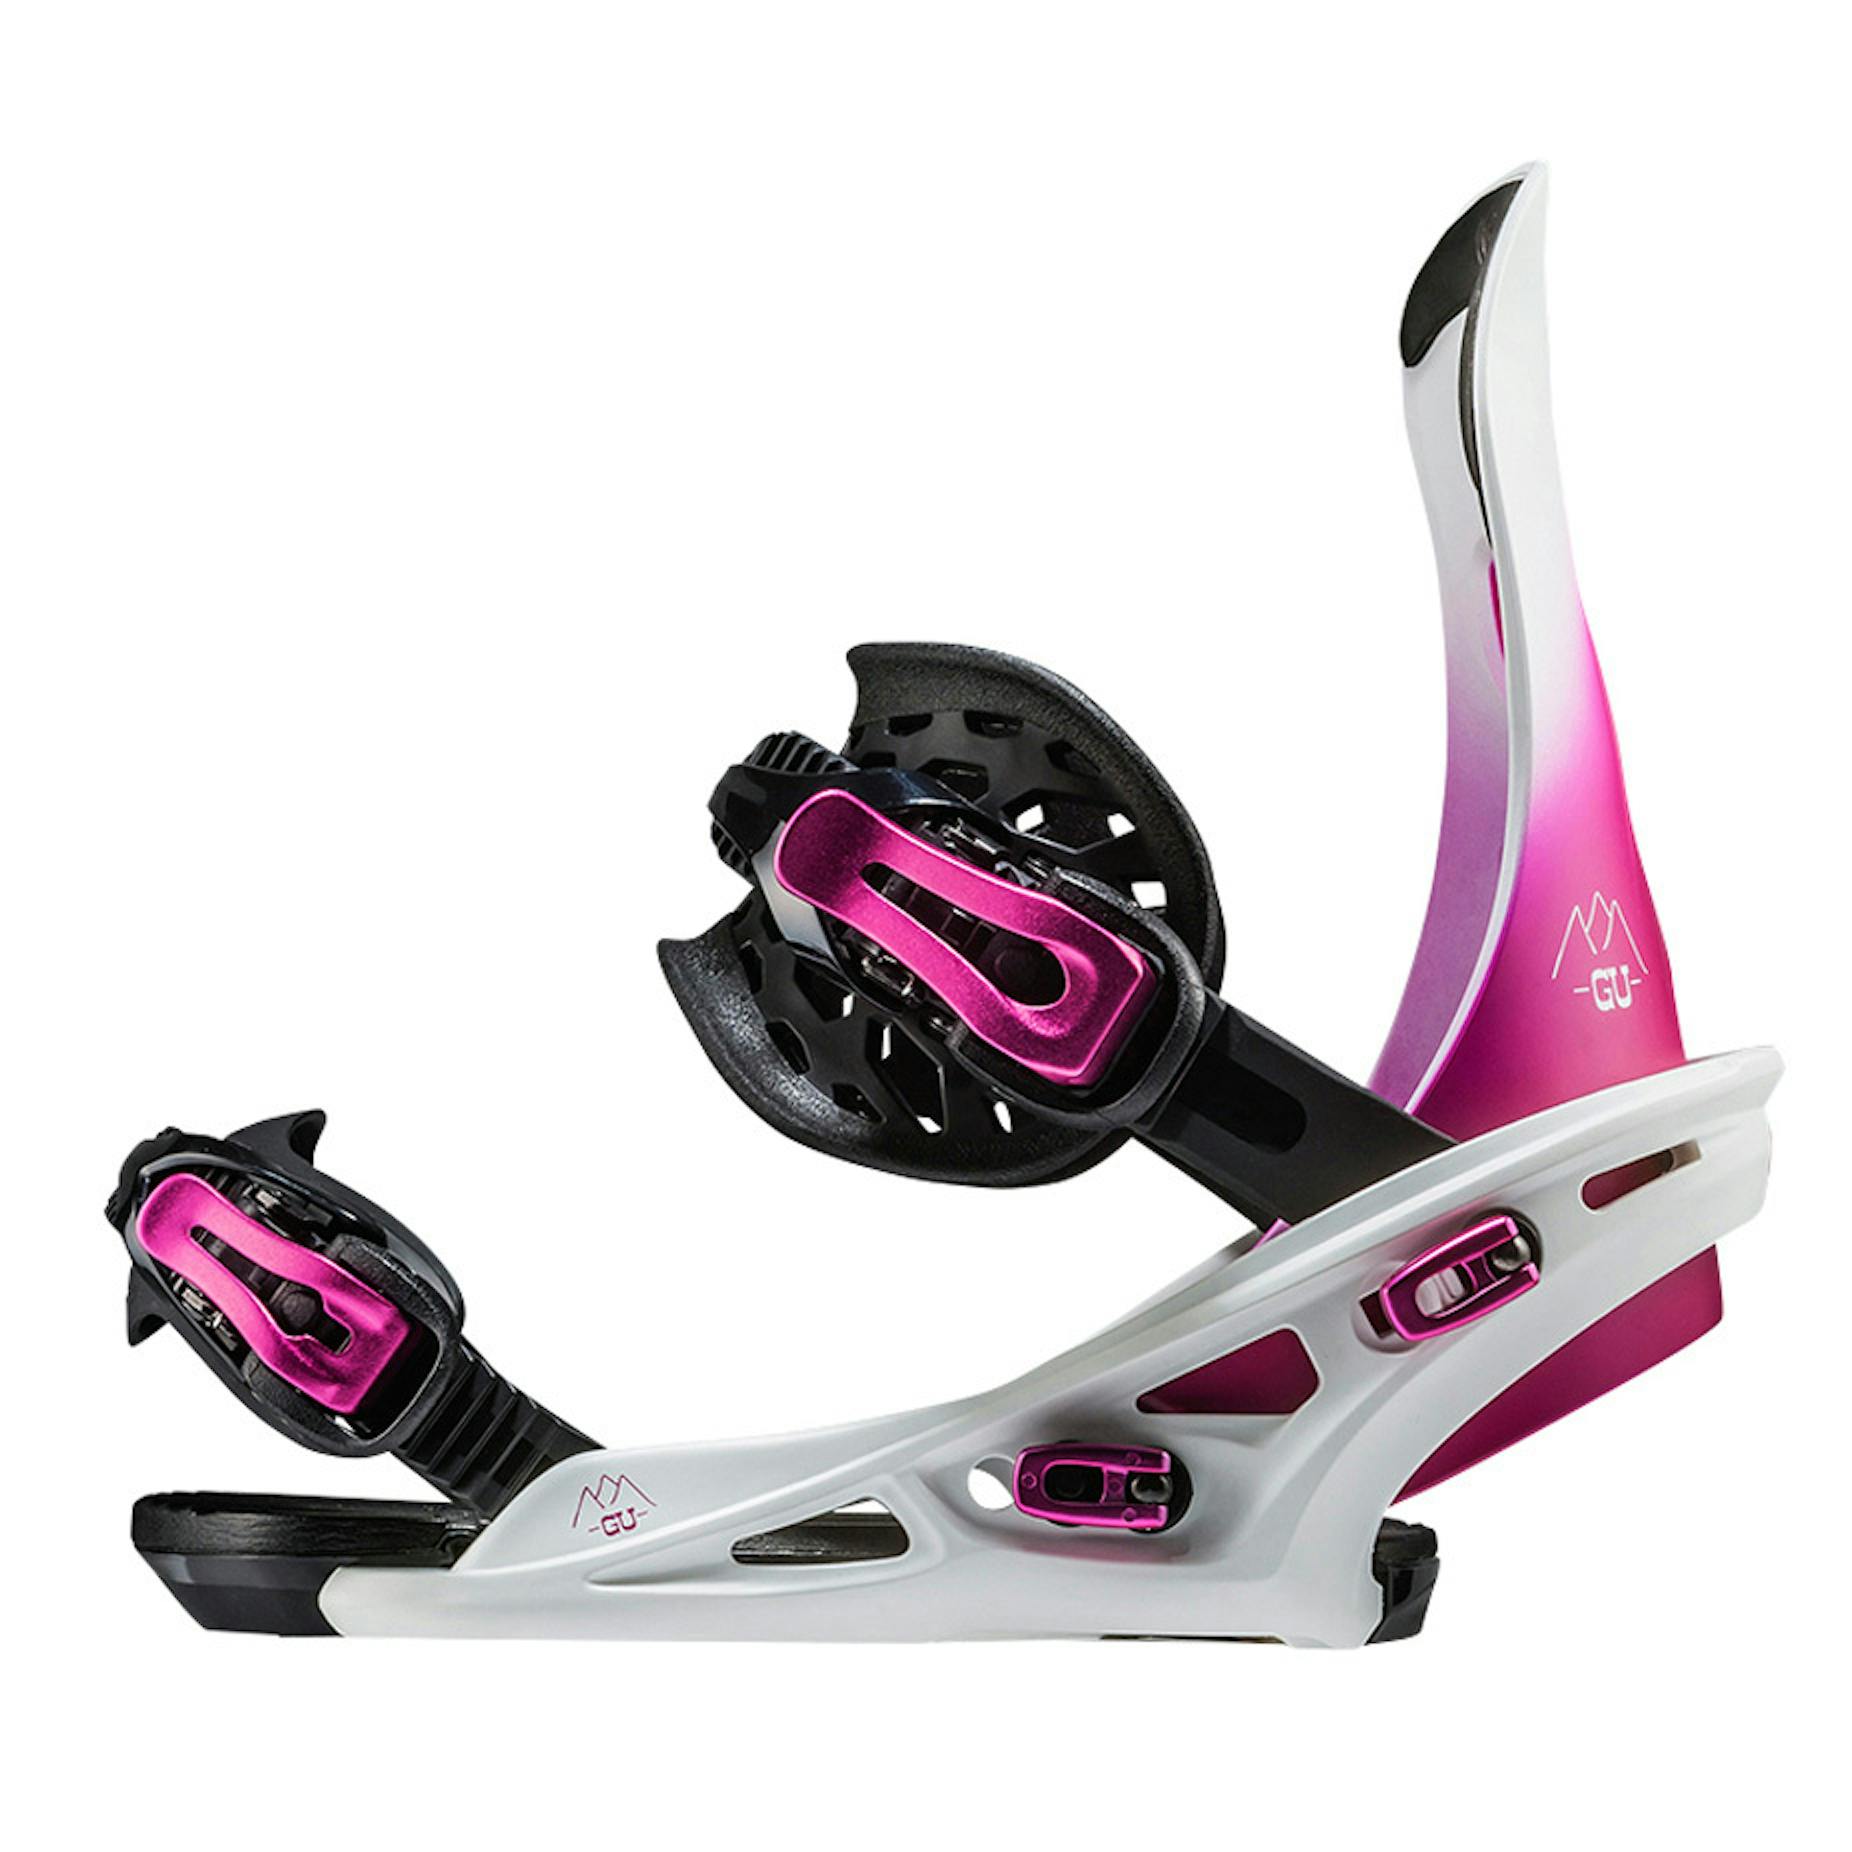 Flux GU Women's Snowboard Bindings 2018 - Pink ...